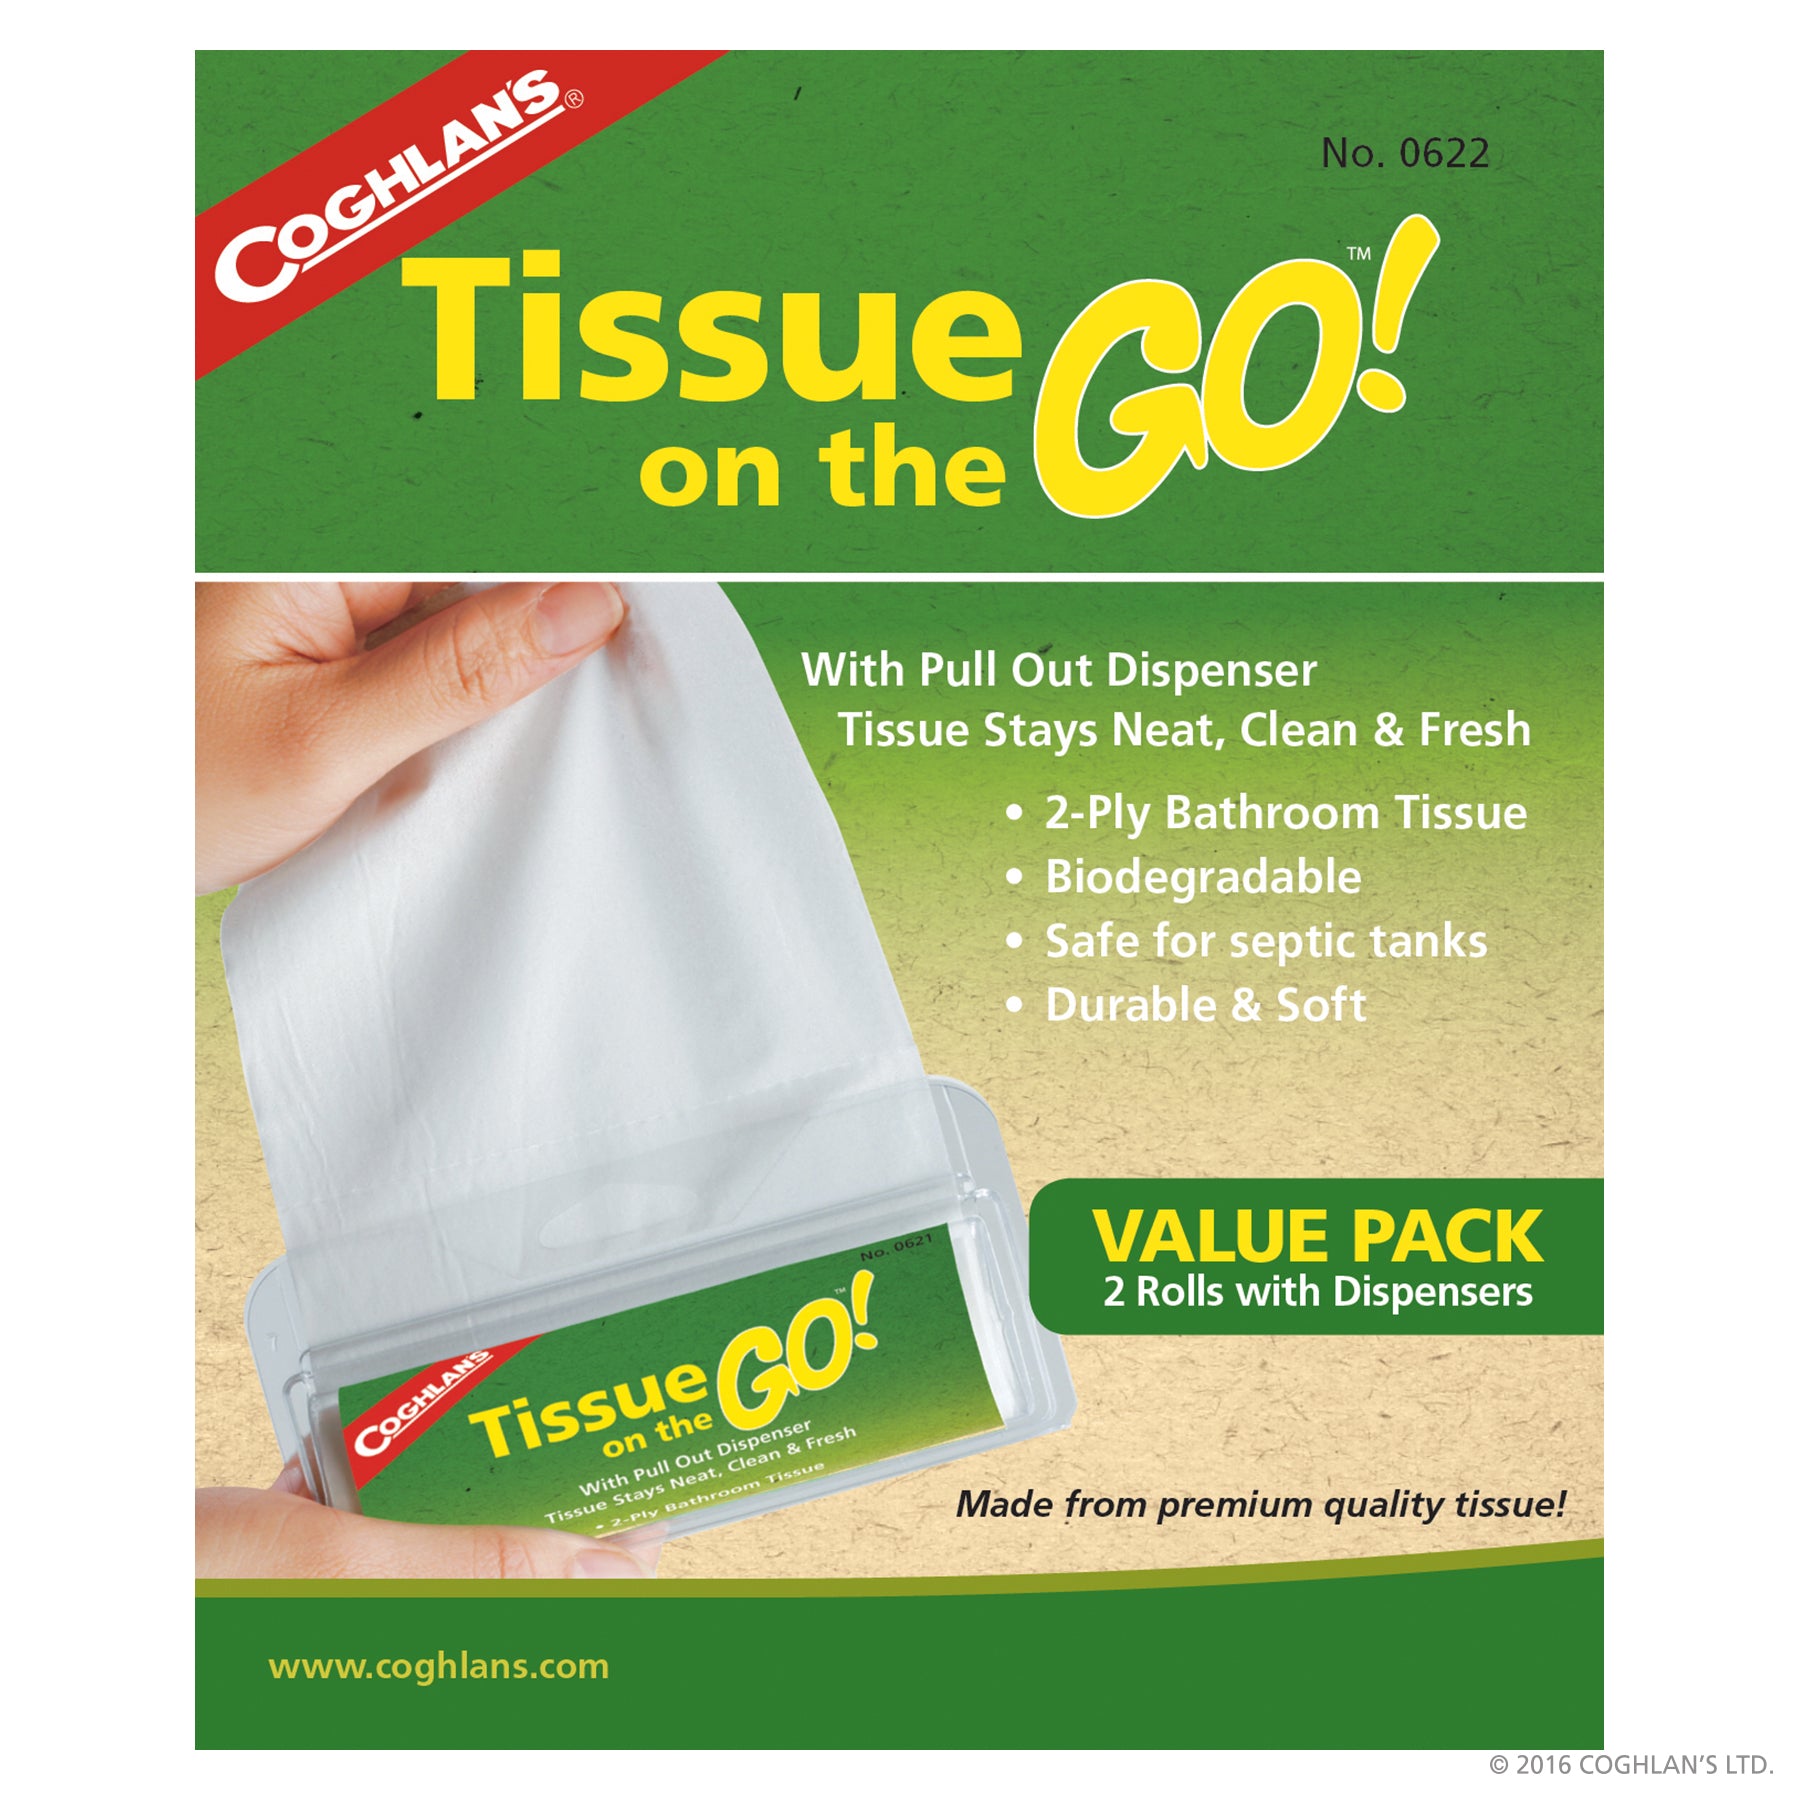 Coghlan's Tissue on the Go!